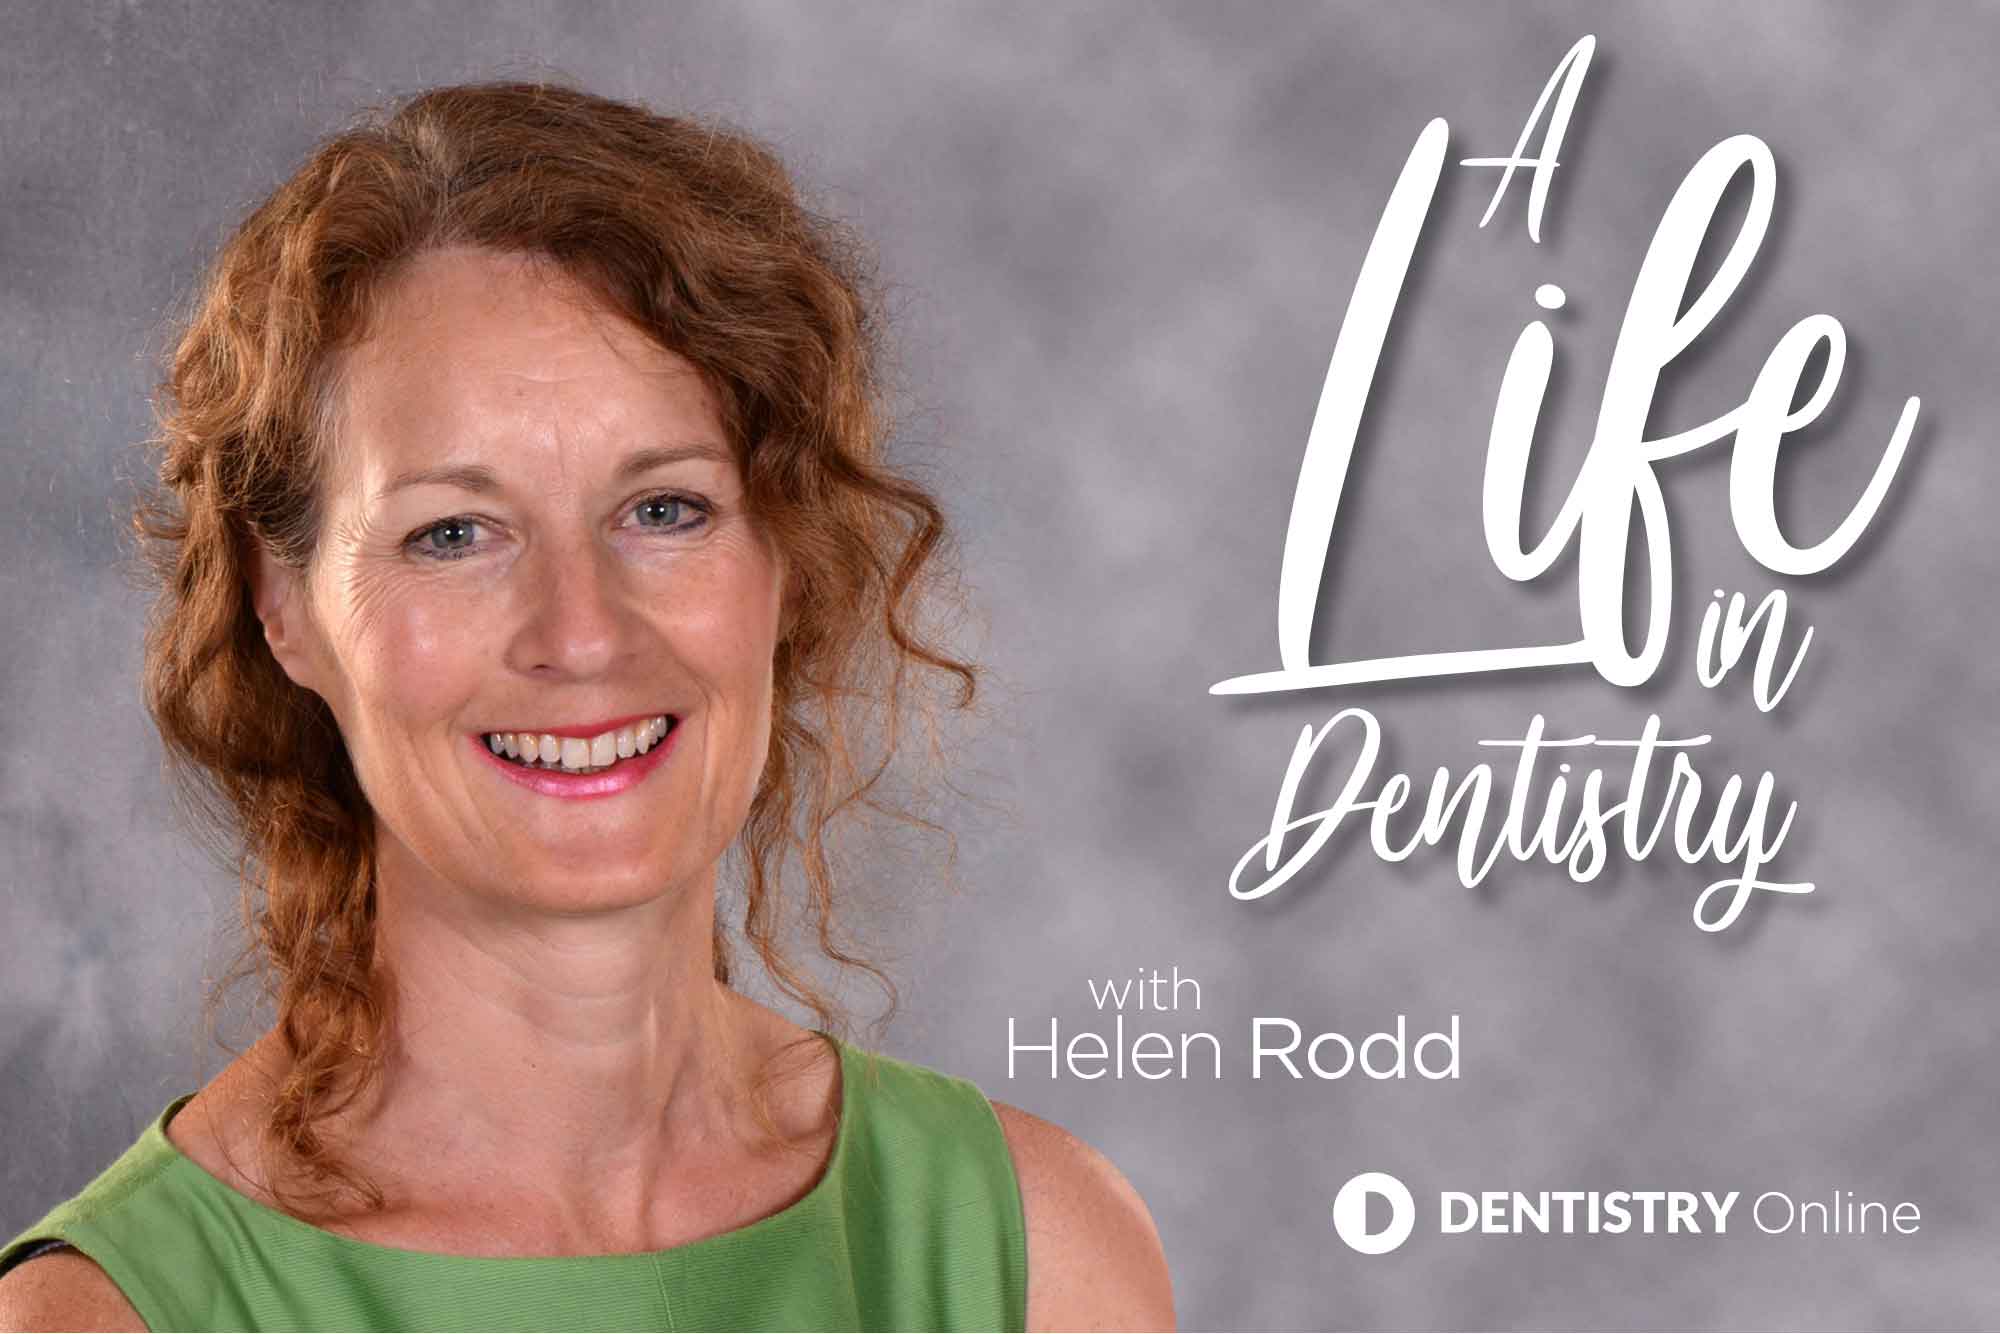 Helen Rodd life in dentistry